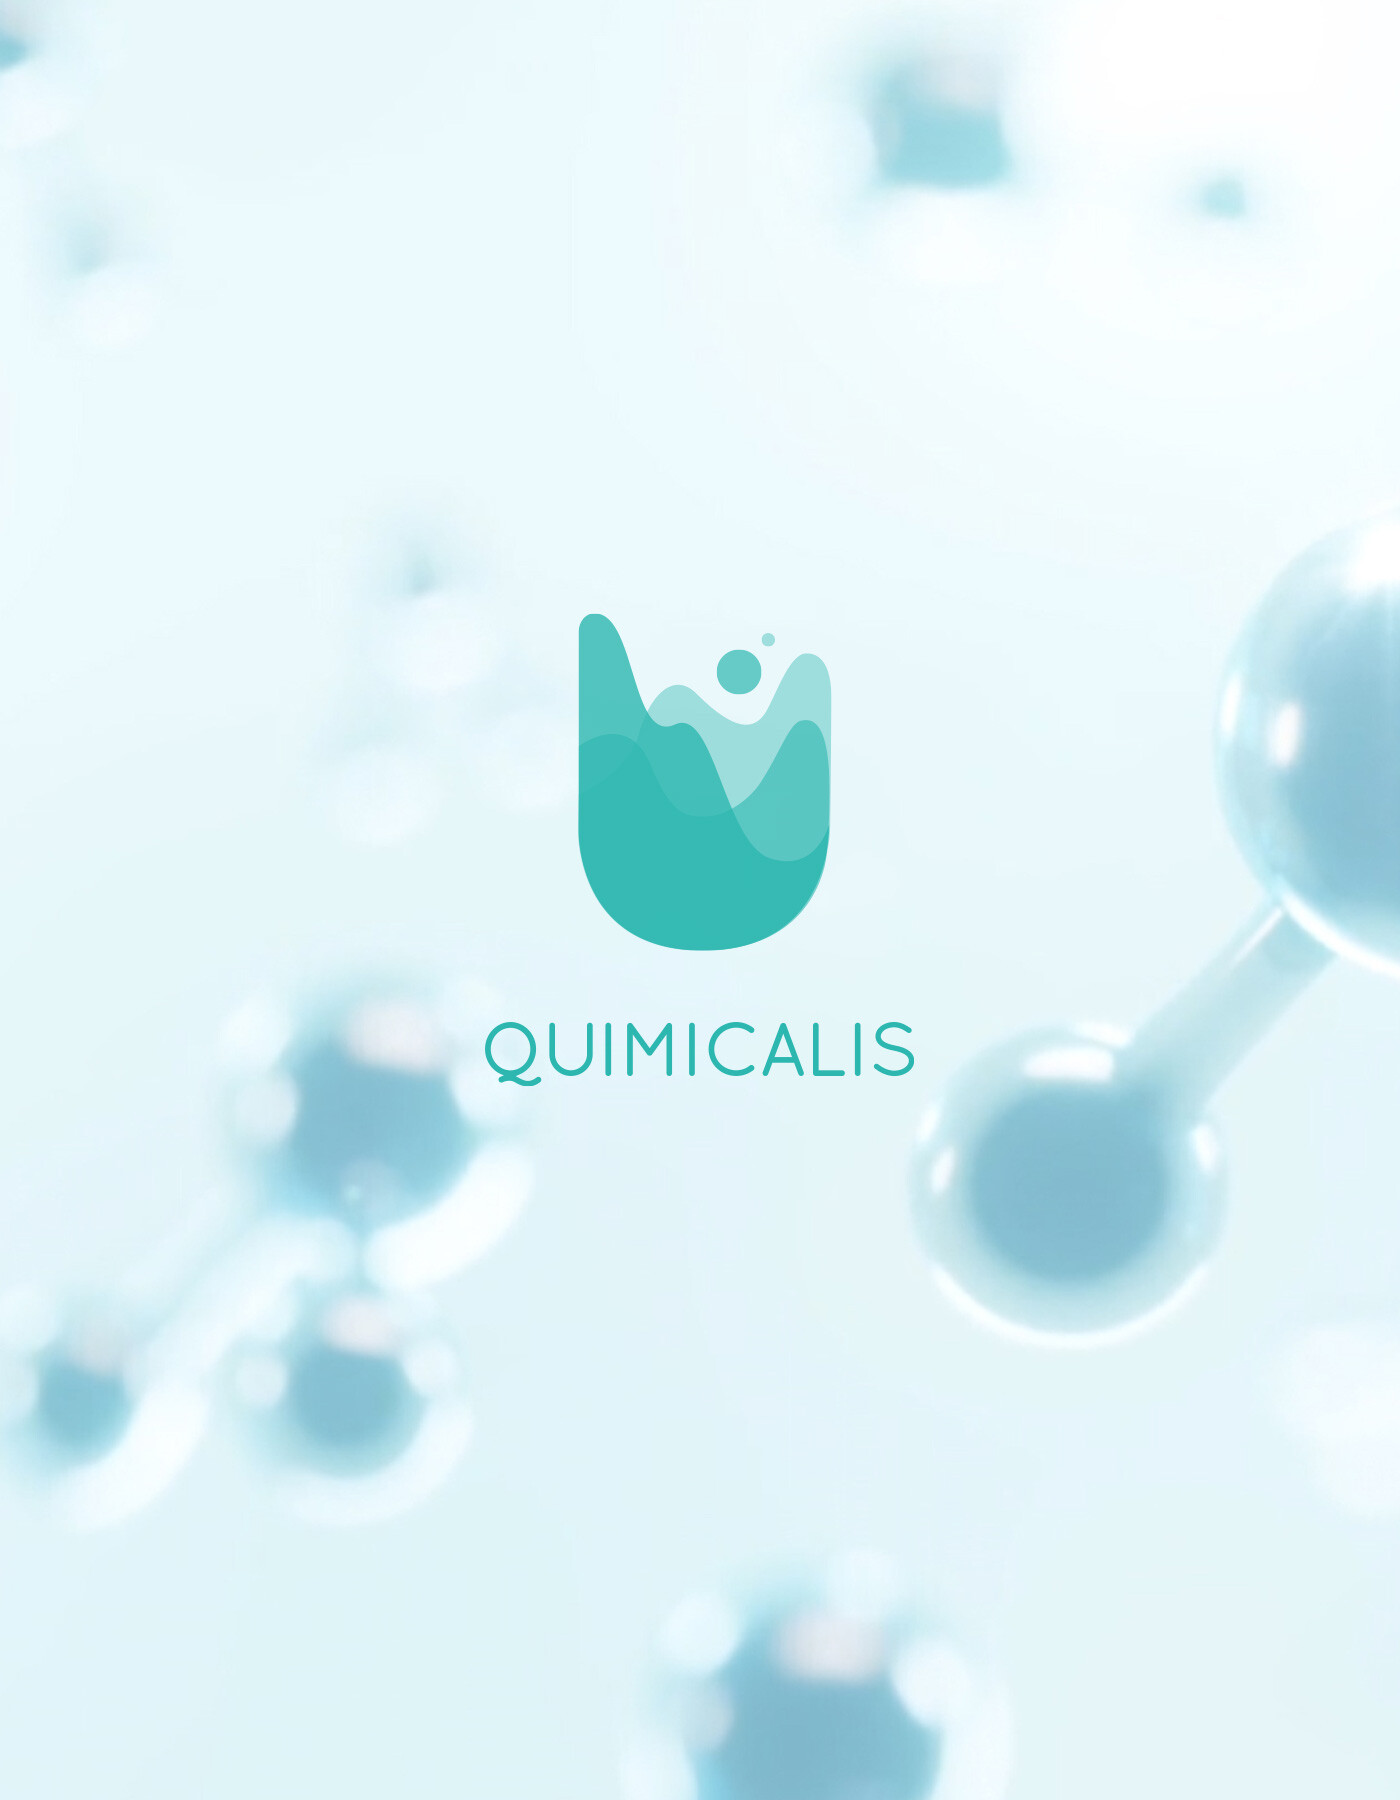 Quimicalis